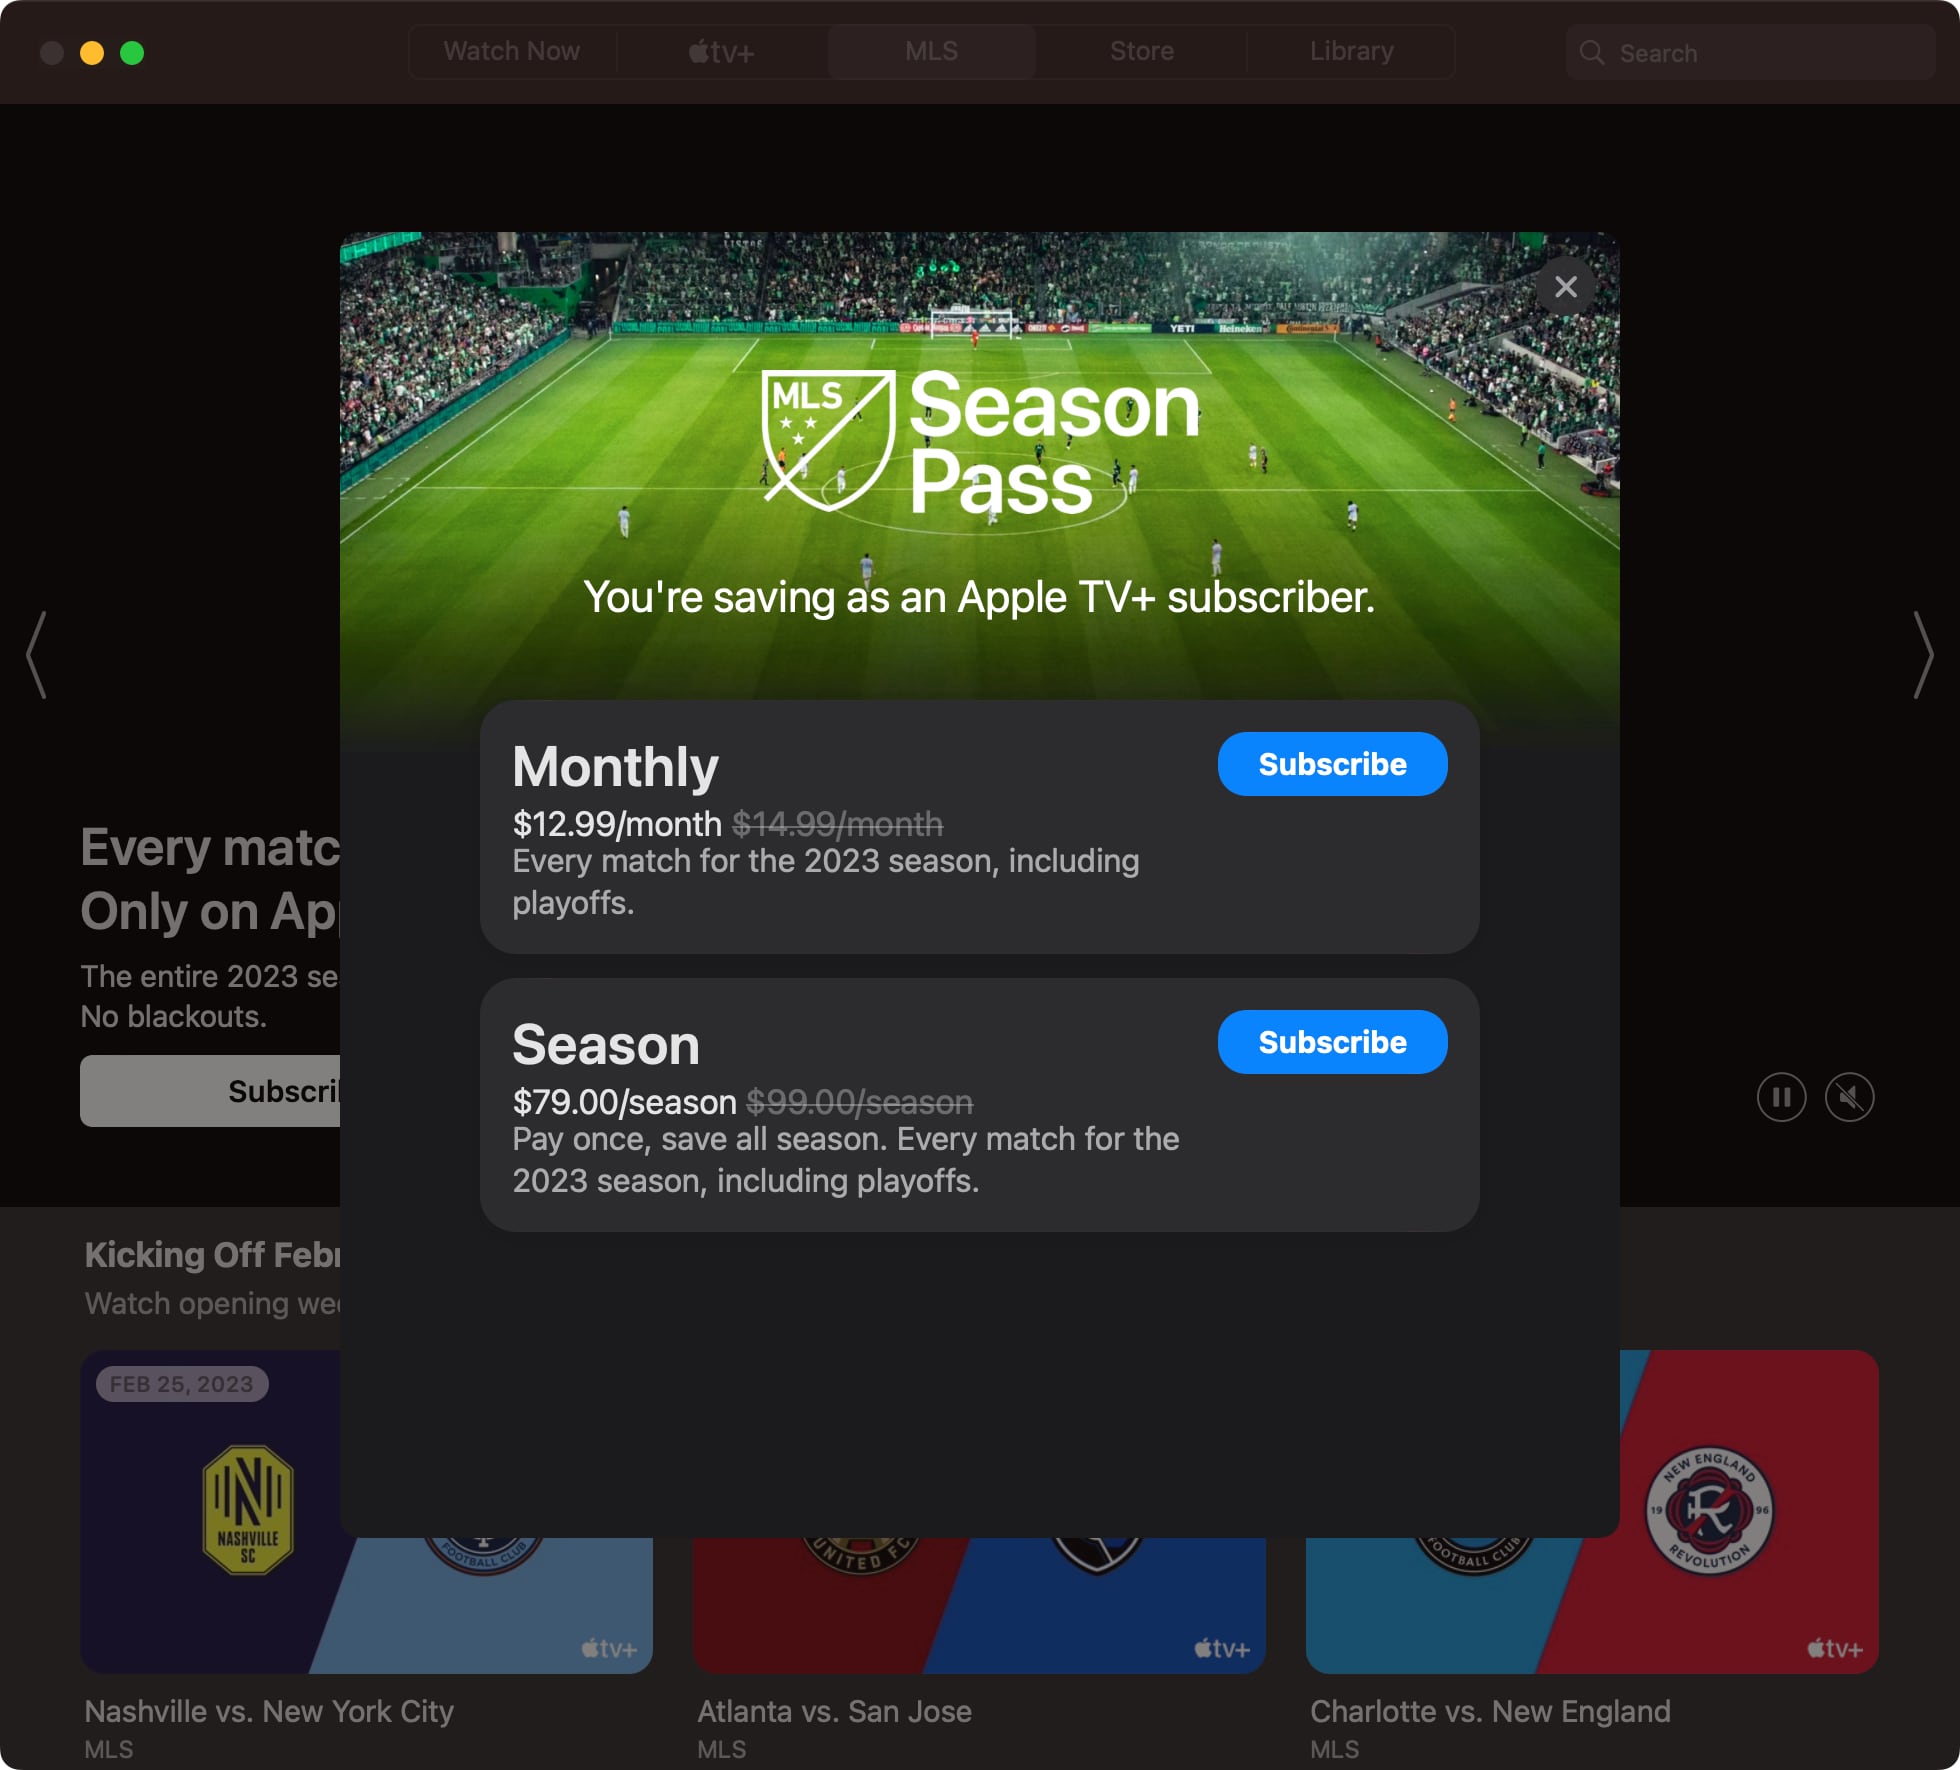 Apple TV app screenshot showcasing Monthly and Season subscriptions for MLS Season Pass